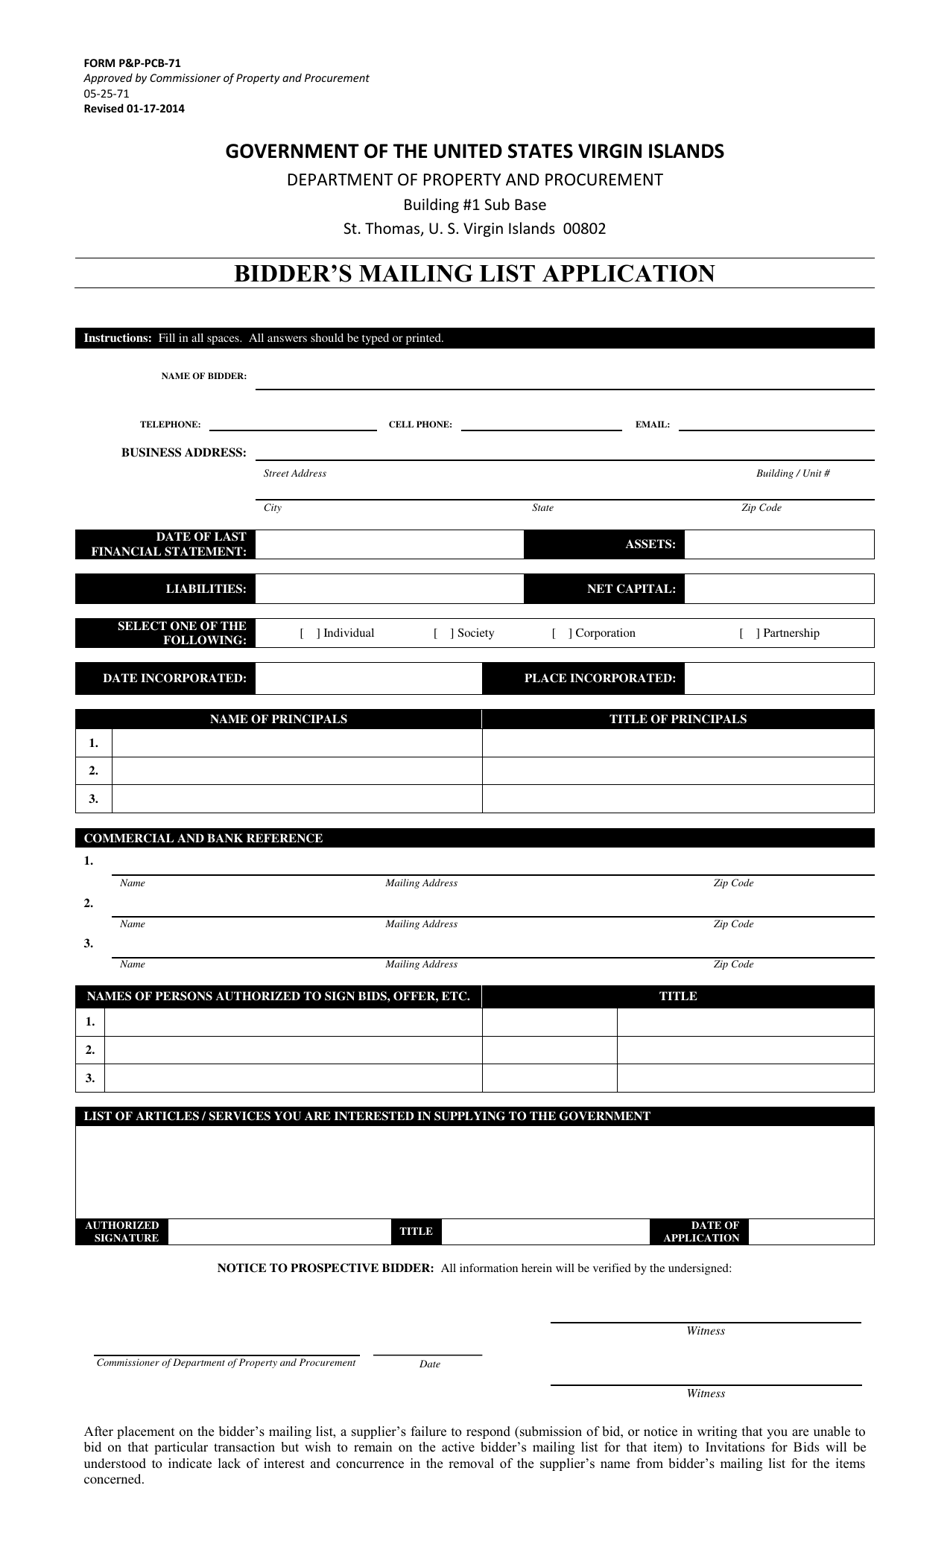 Form PP-PCB-71 Bidders Mailing List Application - Virgin Islands, Page 1